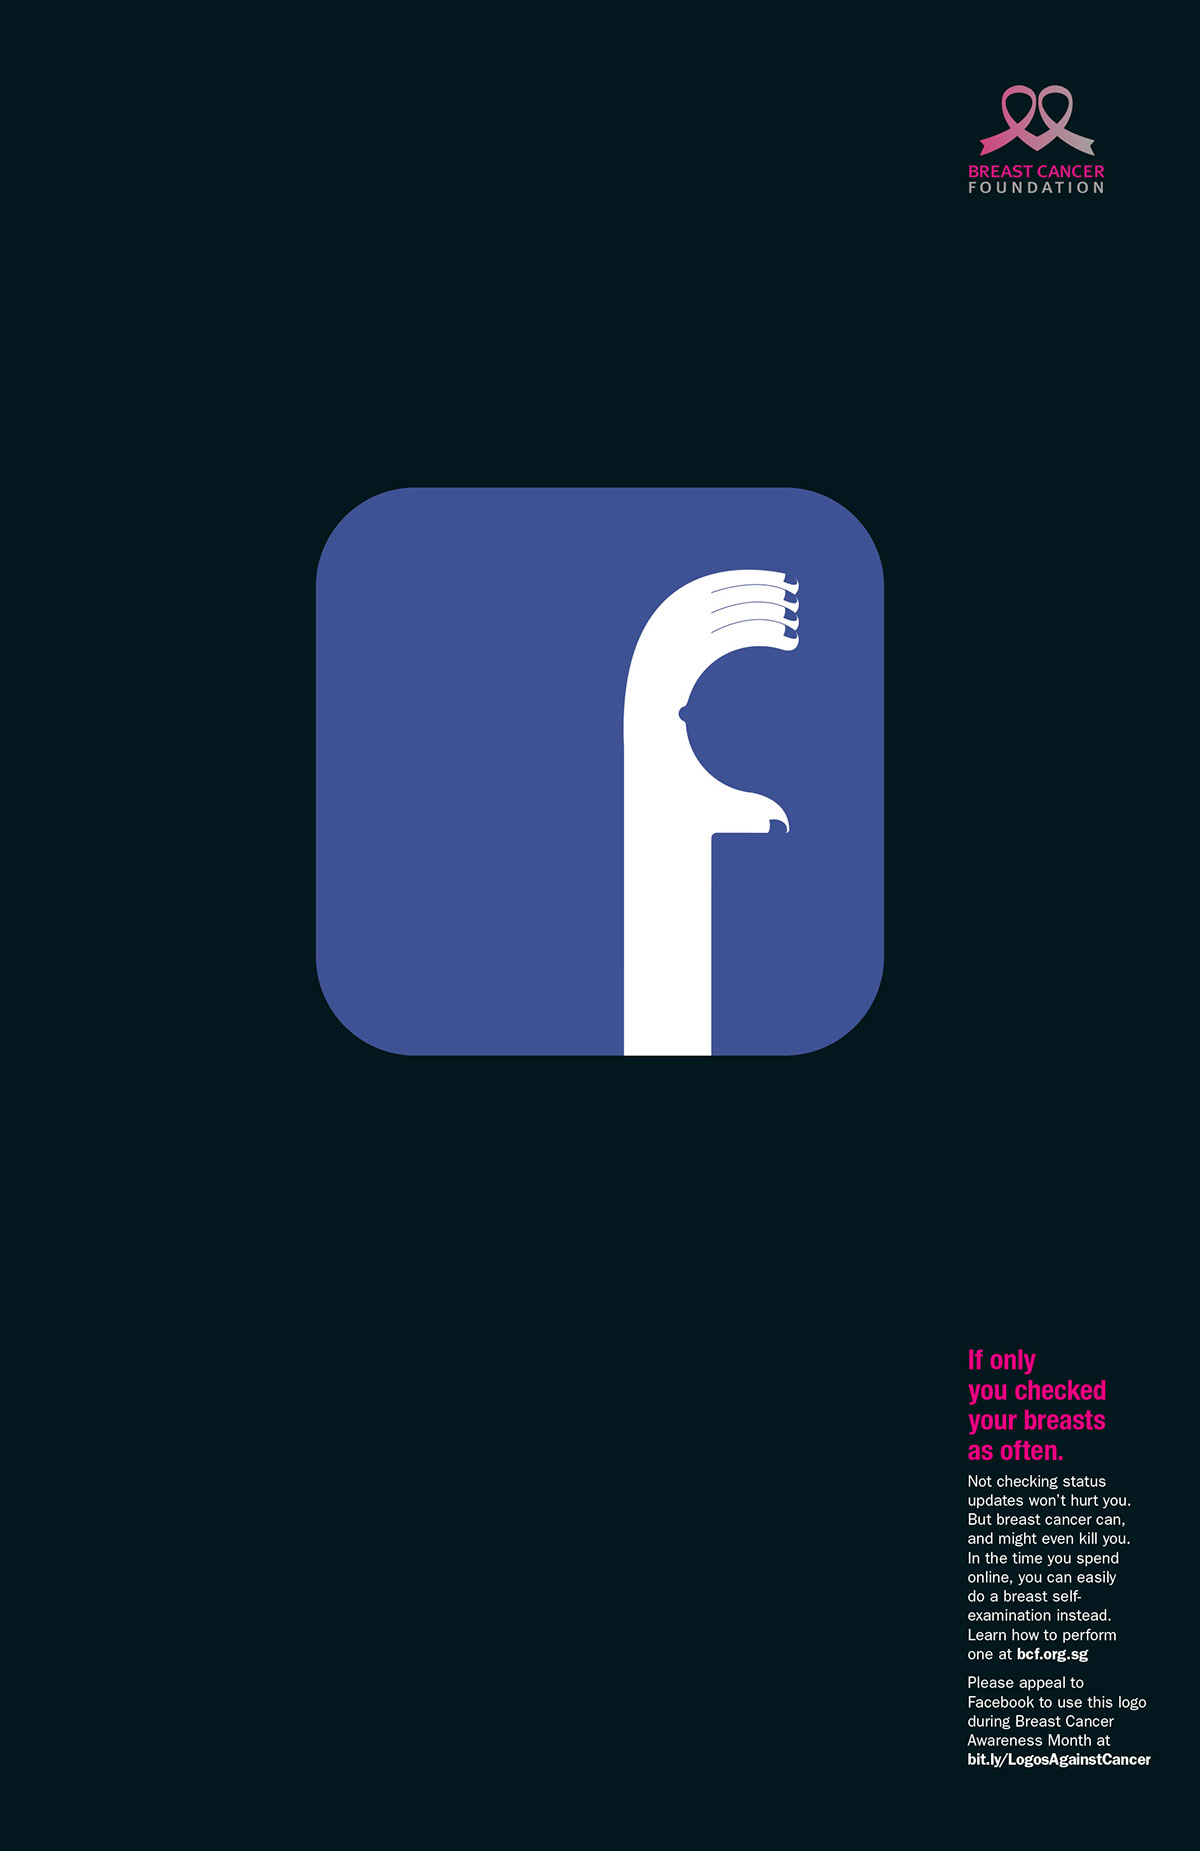 facebook twitter instagram social media funny graphic logo breast cancer public service cancer pledge appeal print poster design